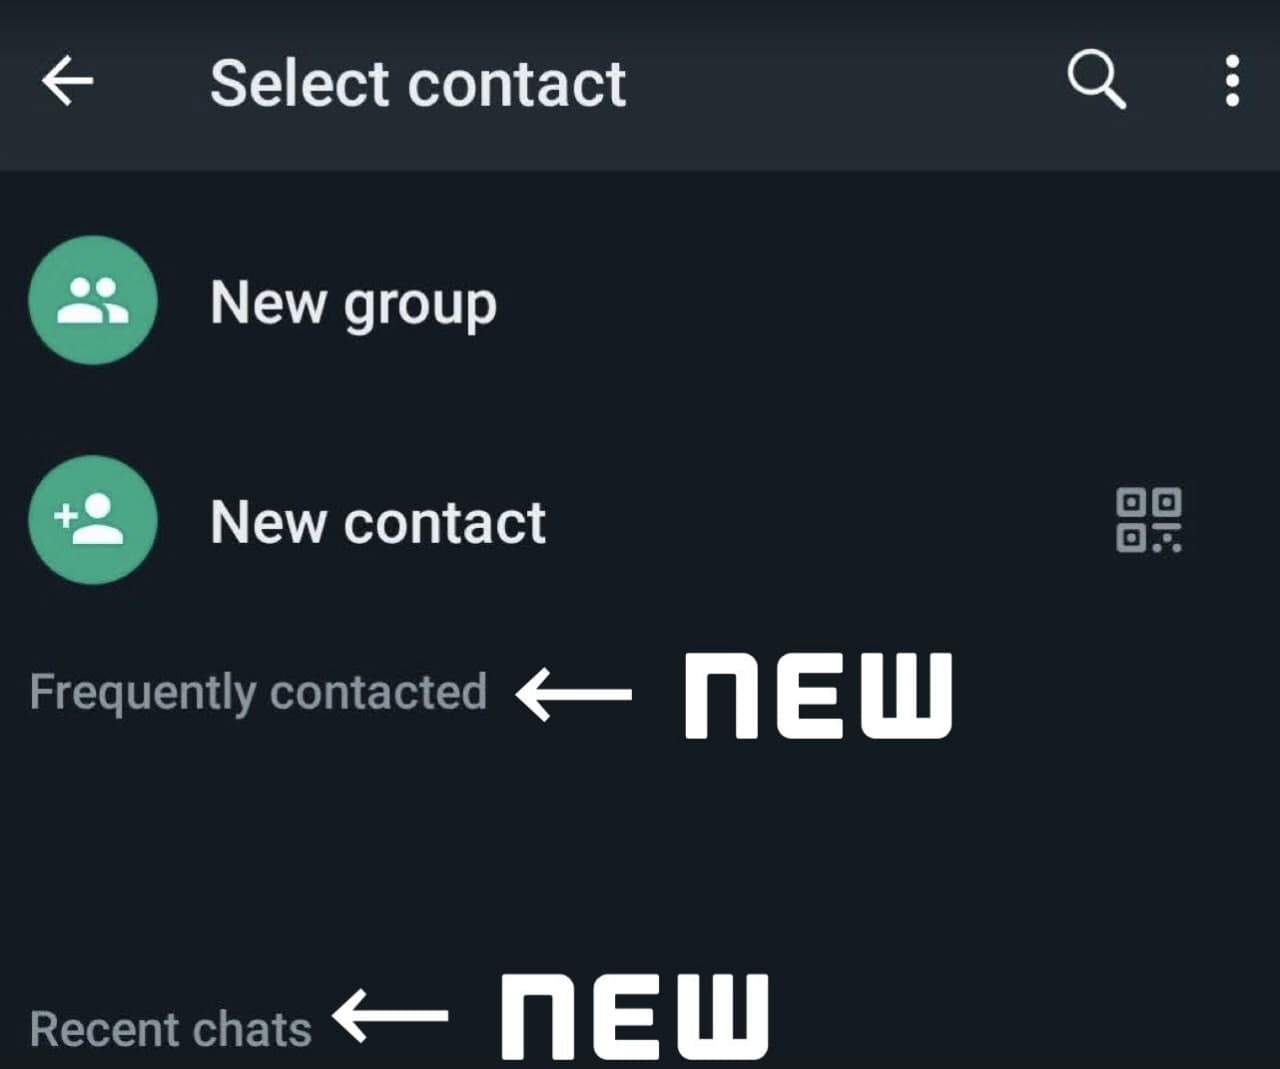 WhatsApp contact list interface